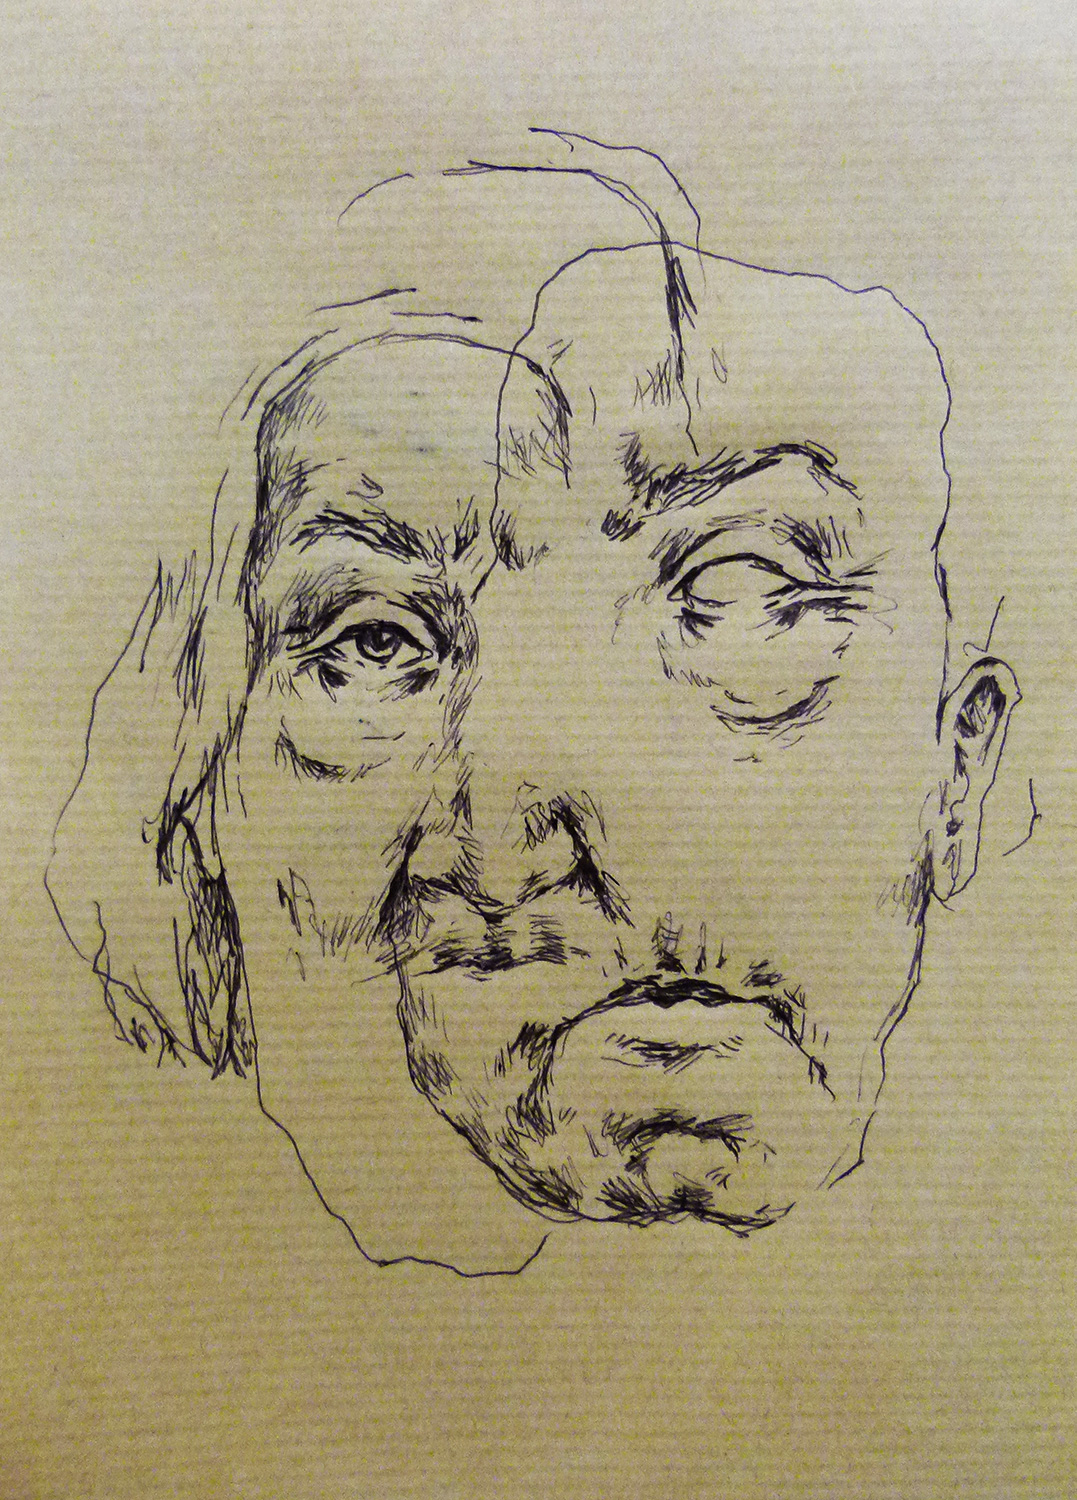 pen on paper, 20 x 15 cm, 2016